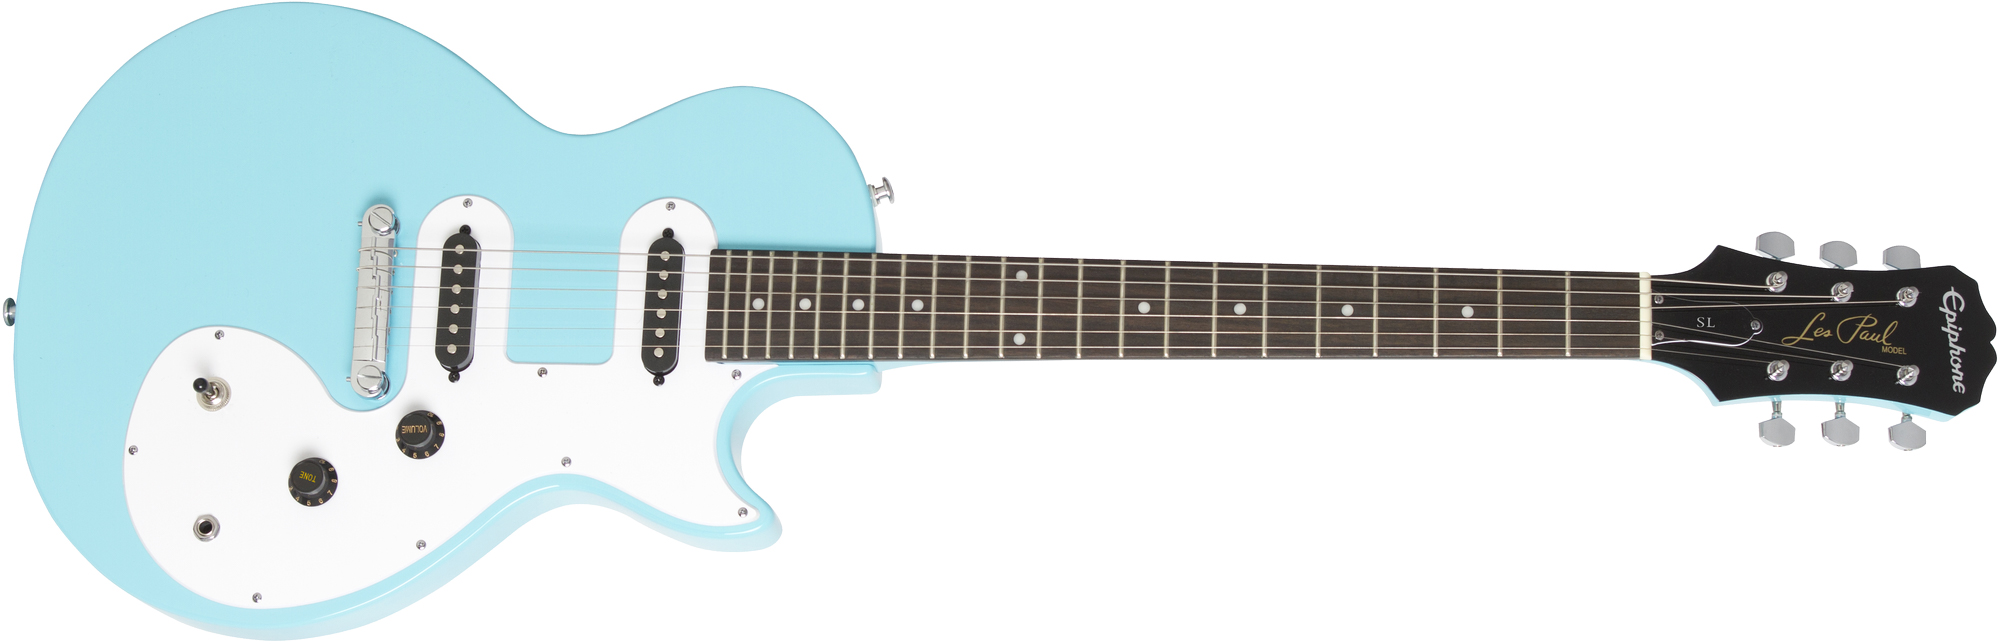 Billede af Epiphone Les Paul Melody Maker El-guitar (Pacific blue)